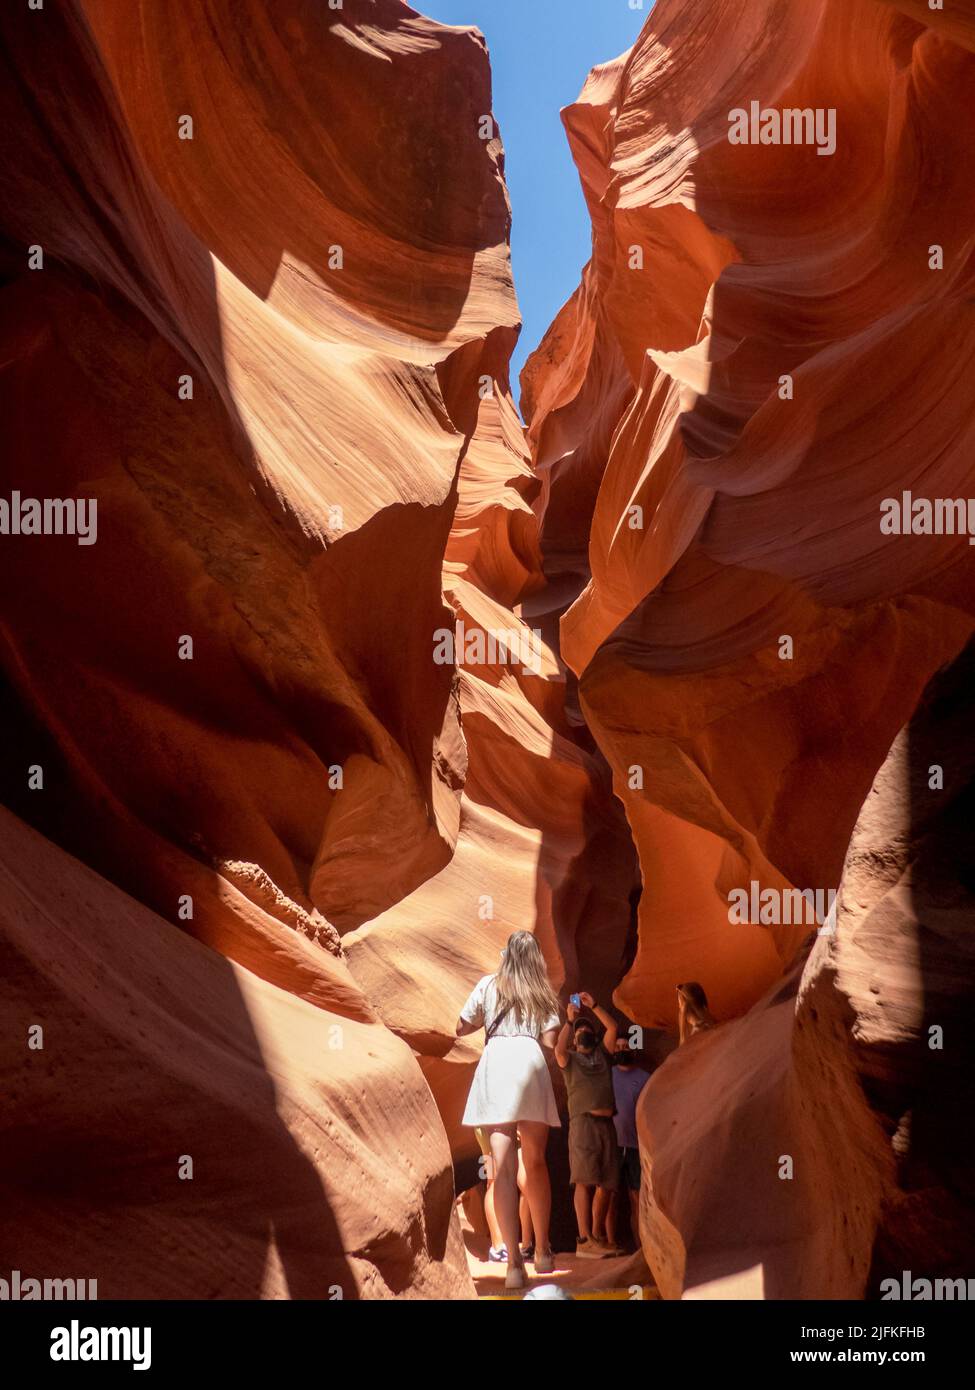 Lower Antelope Canyon near Page, Arizona. Inside the slot canyon. Stock Photo